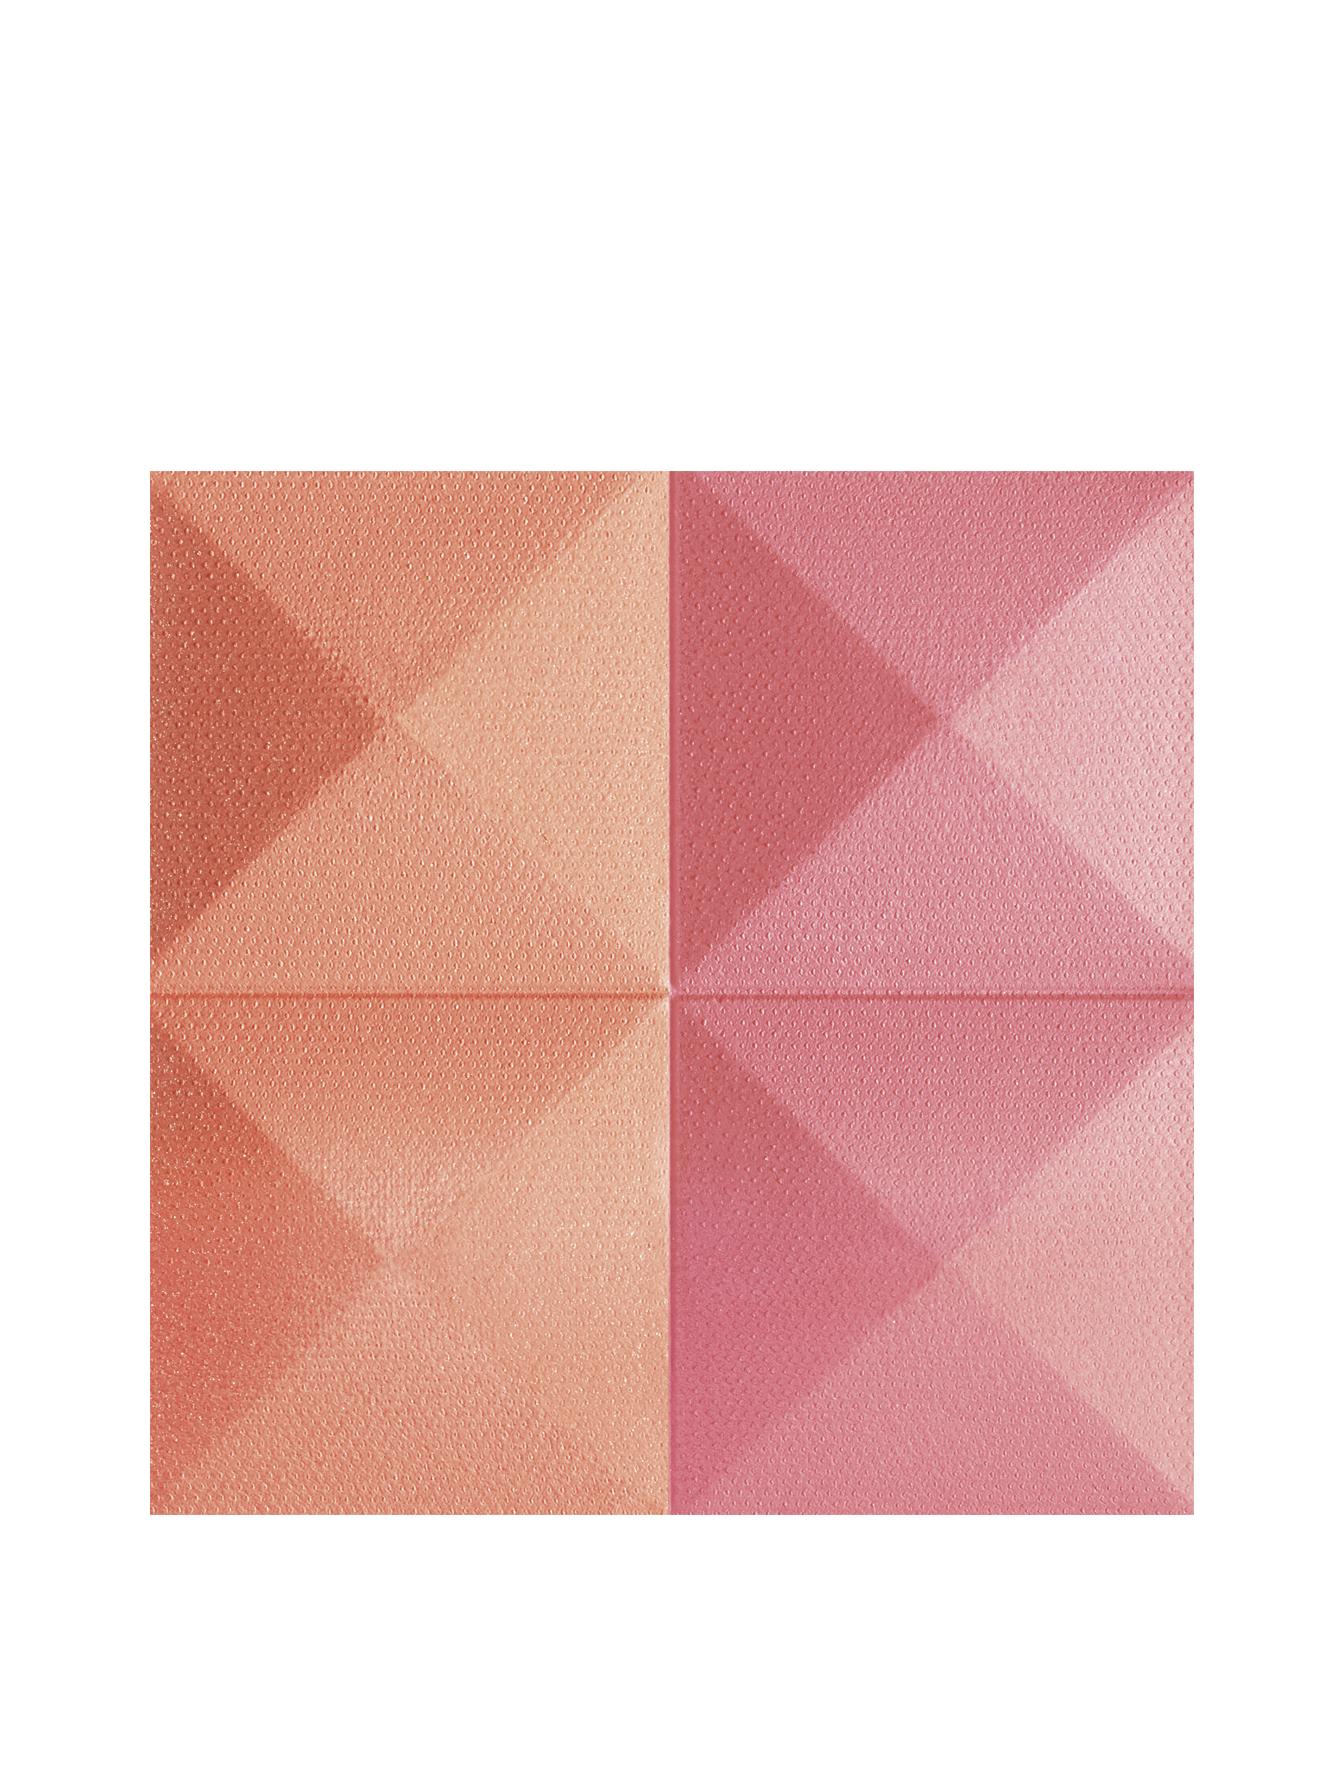 Компактные двухцветные румяна для лица PRISME BLUSH, 04 церемония, 7 г - Обтравка1